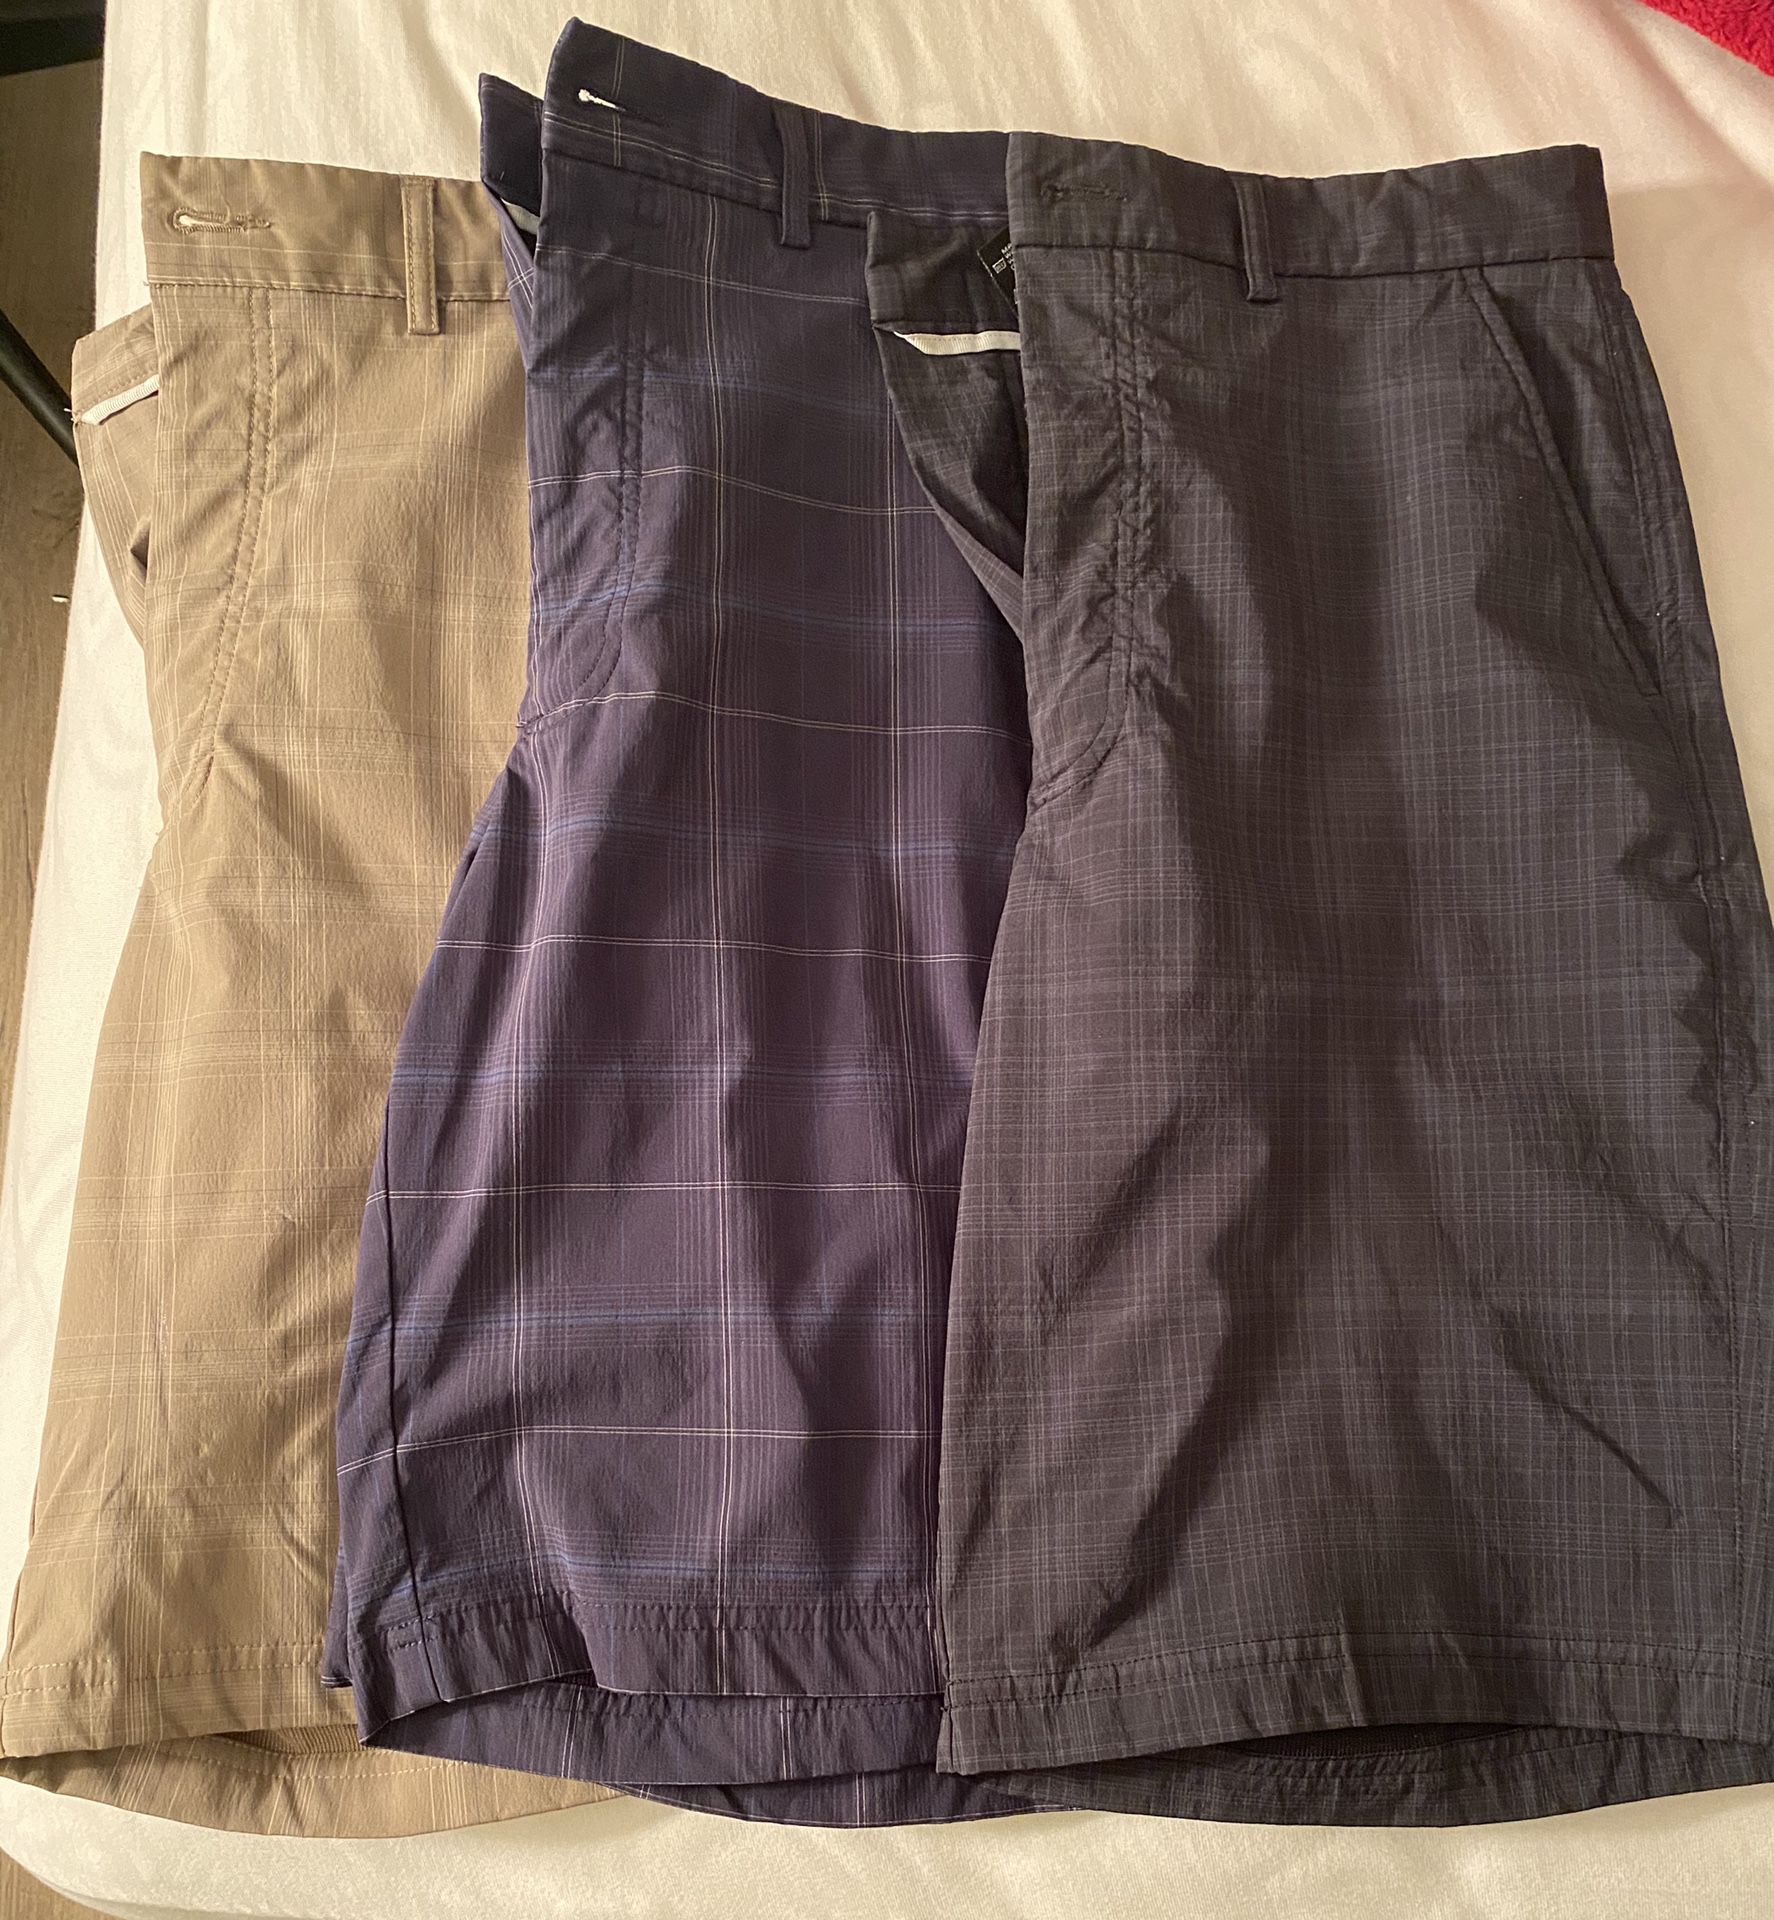 Golfing shorts - Size 32 - KIRKLAND brand. $5 EACH.